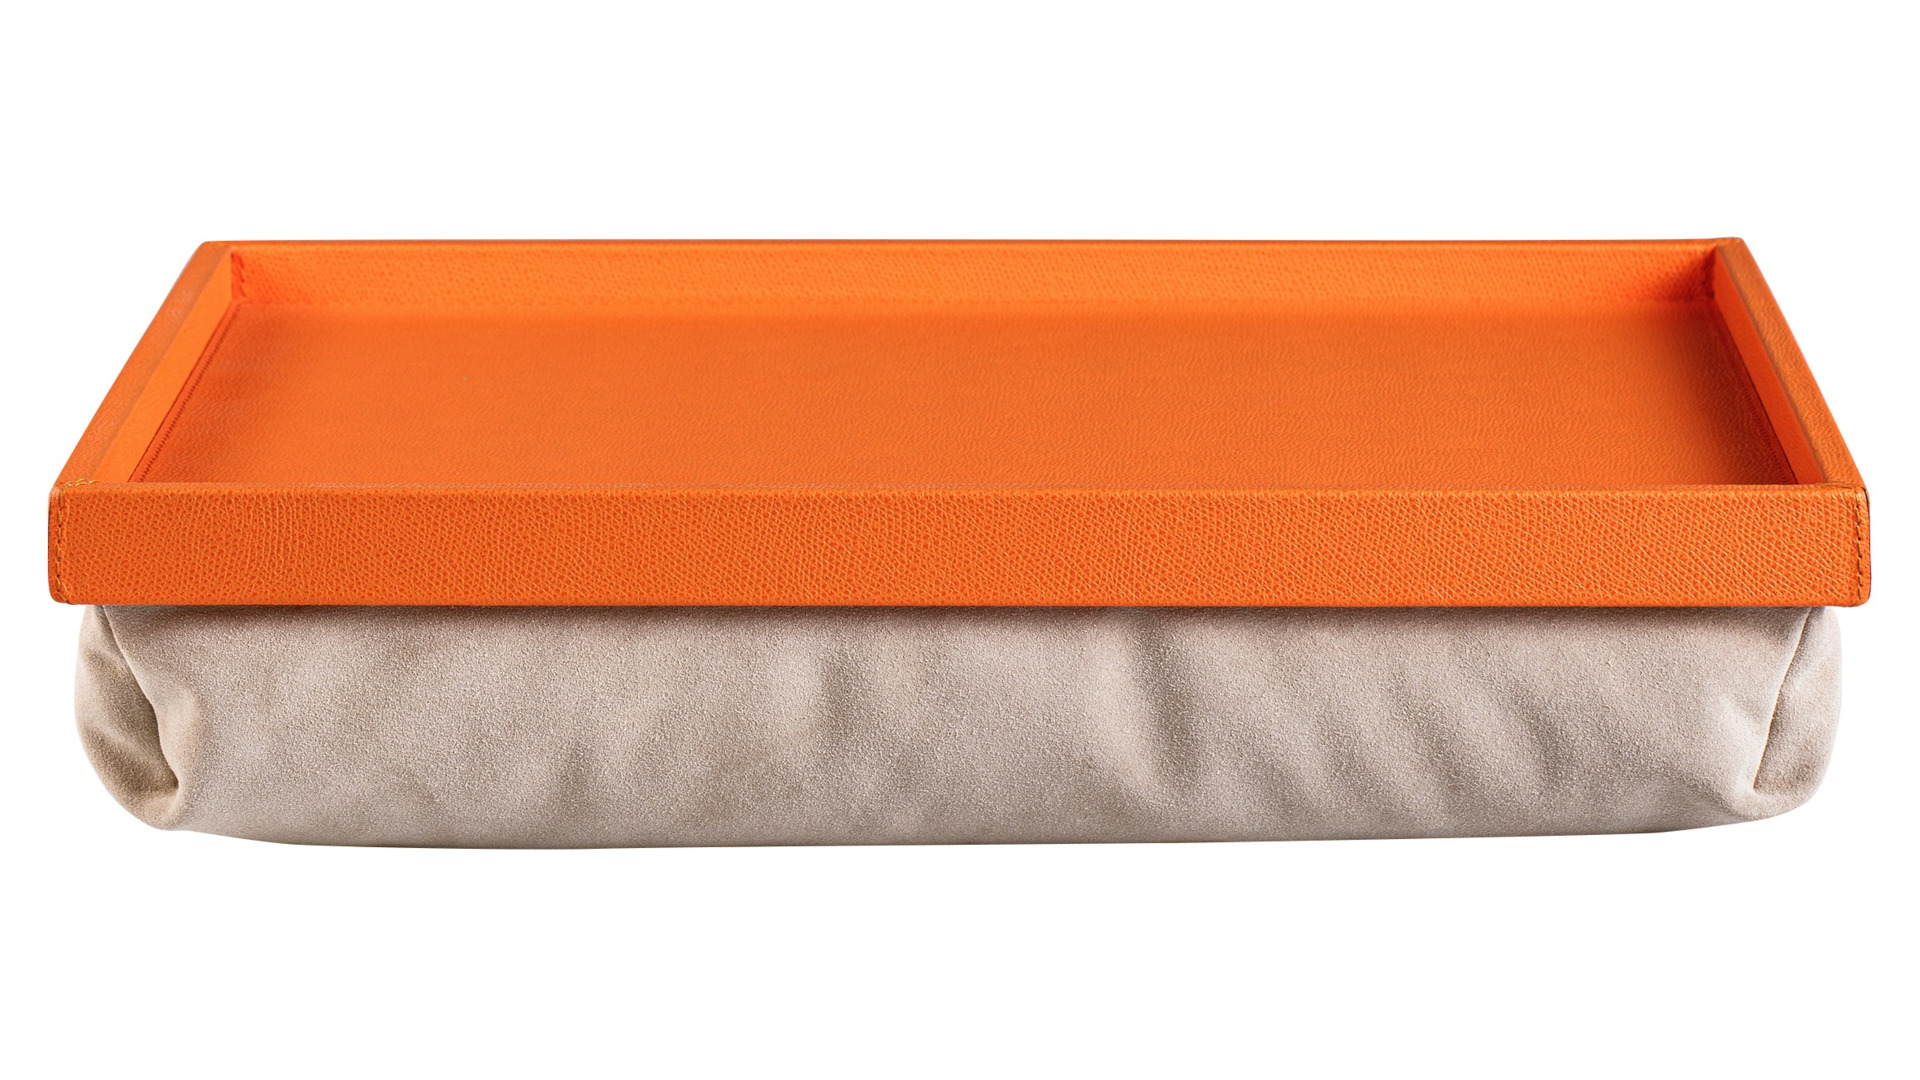 Поднос GioBagnara Тедди 44,5x34,5 см, оранжевый, замша, айвори